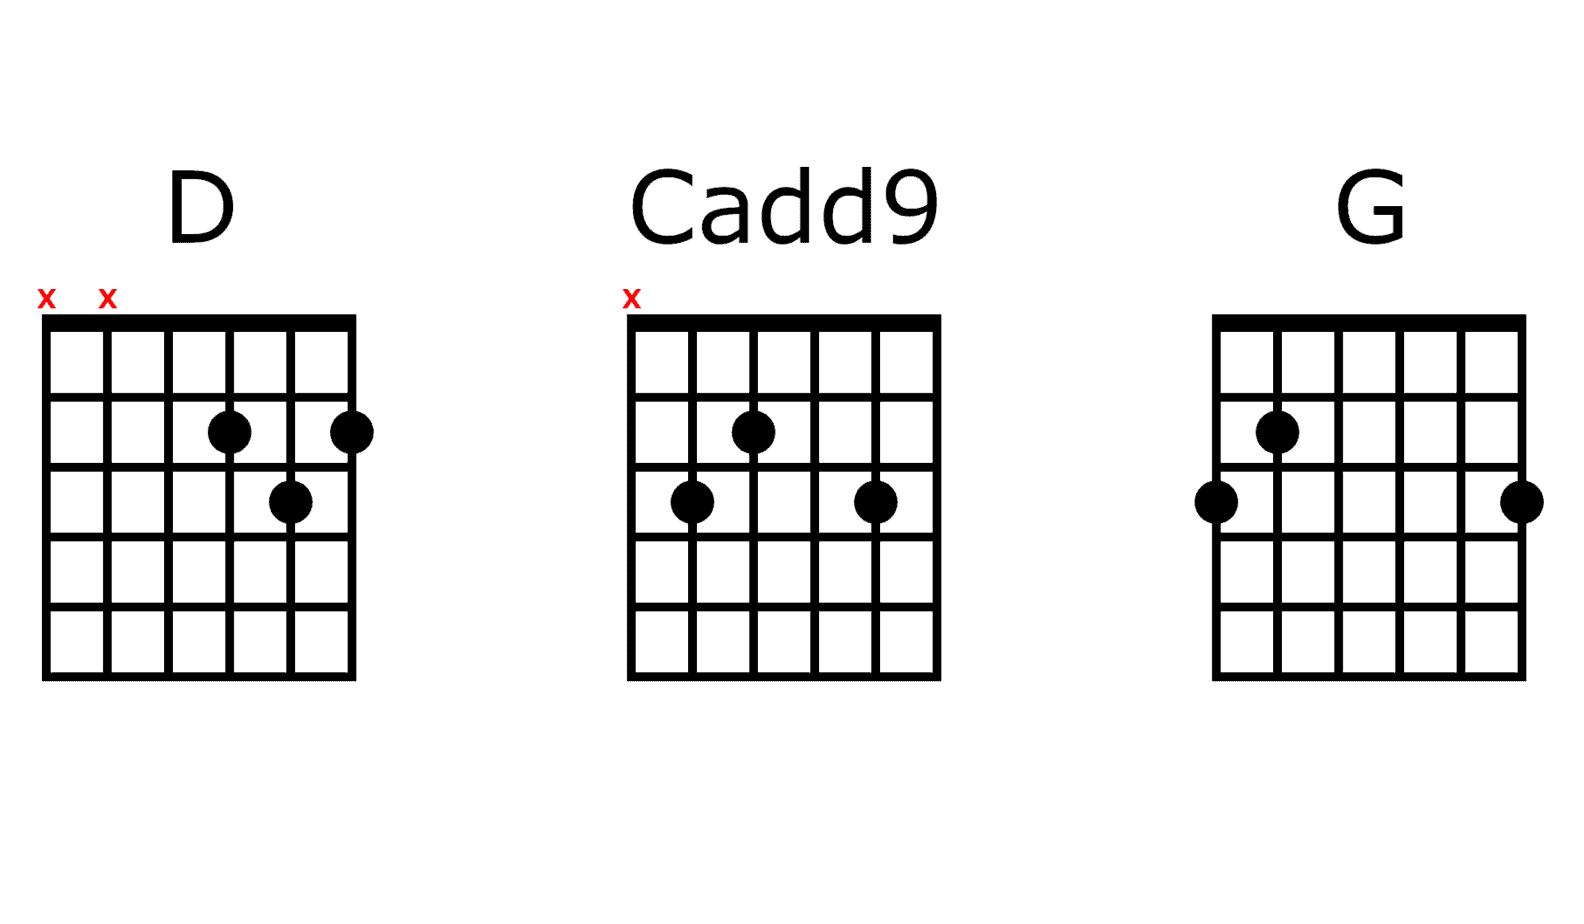 three chord songs on guitar